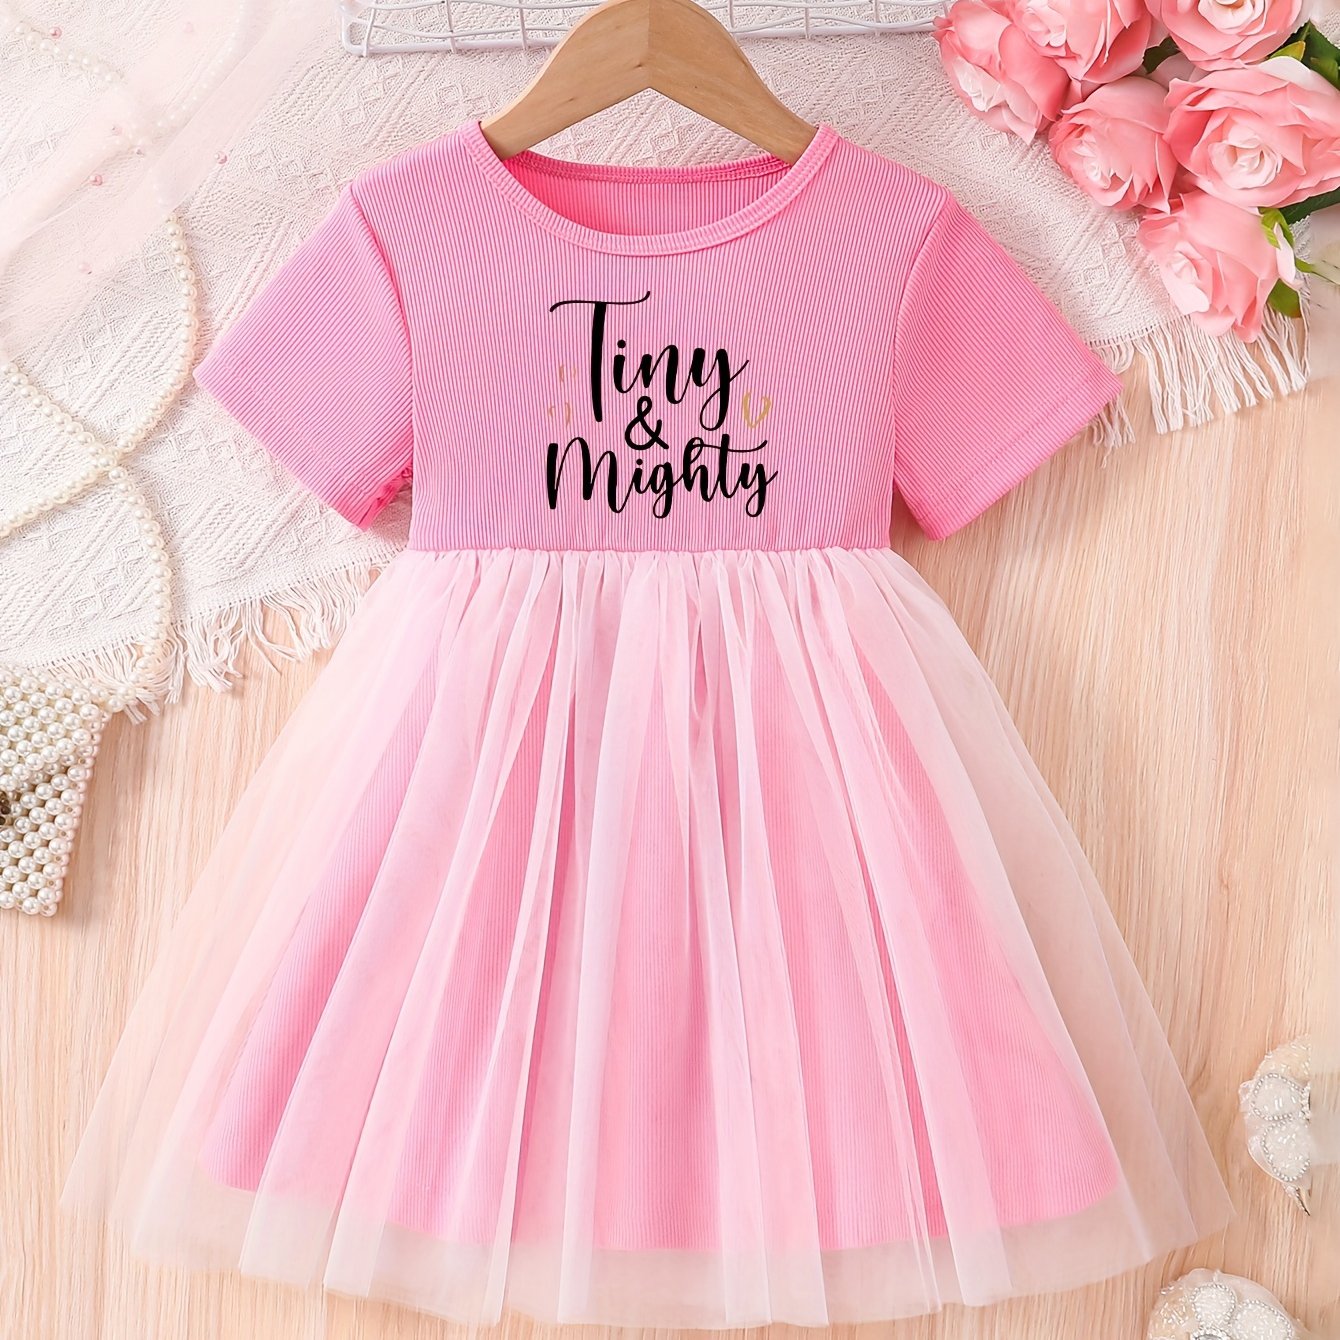 Tiny & Mighty Christian Toddler Dress claimedbygoddesigns